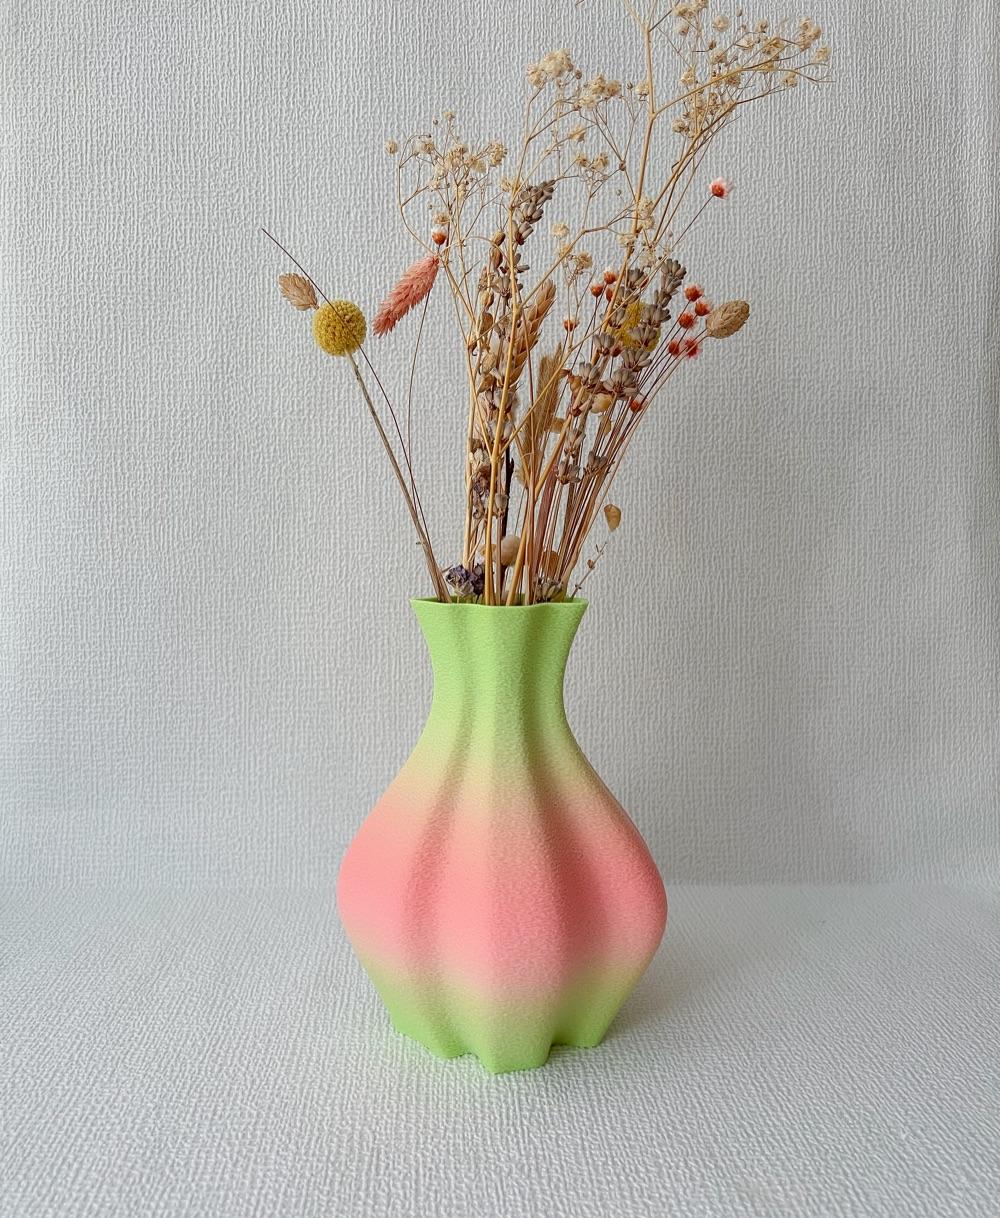 Vase 2.3.2.stl - Beautiful vase in fuzzy skin.
Isanmate rainbow filament - 3d model